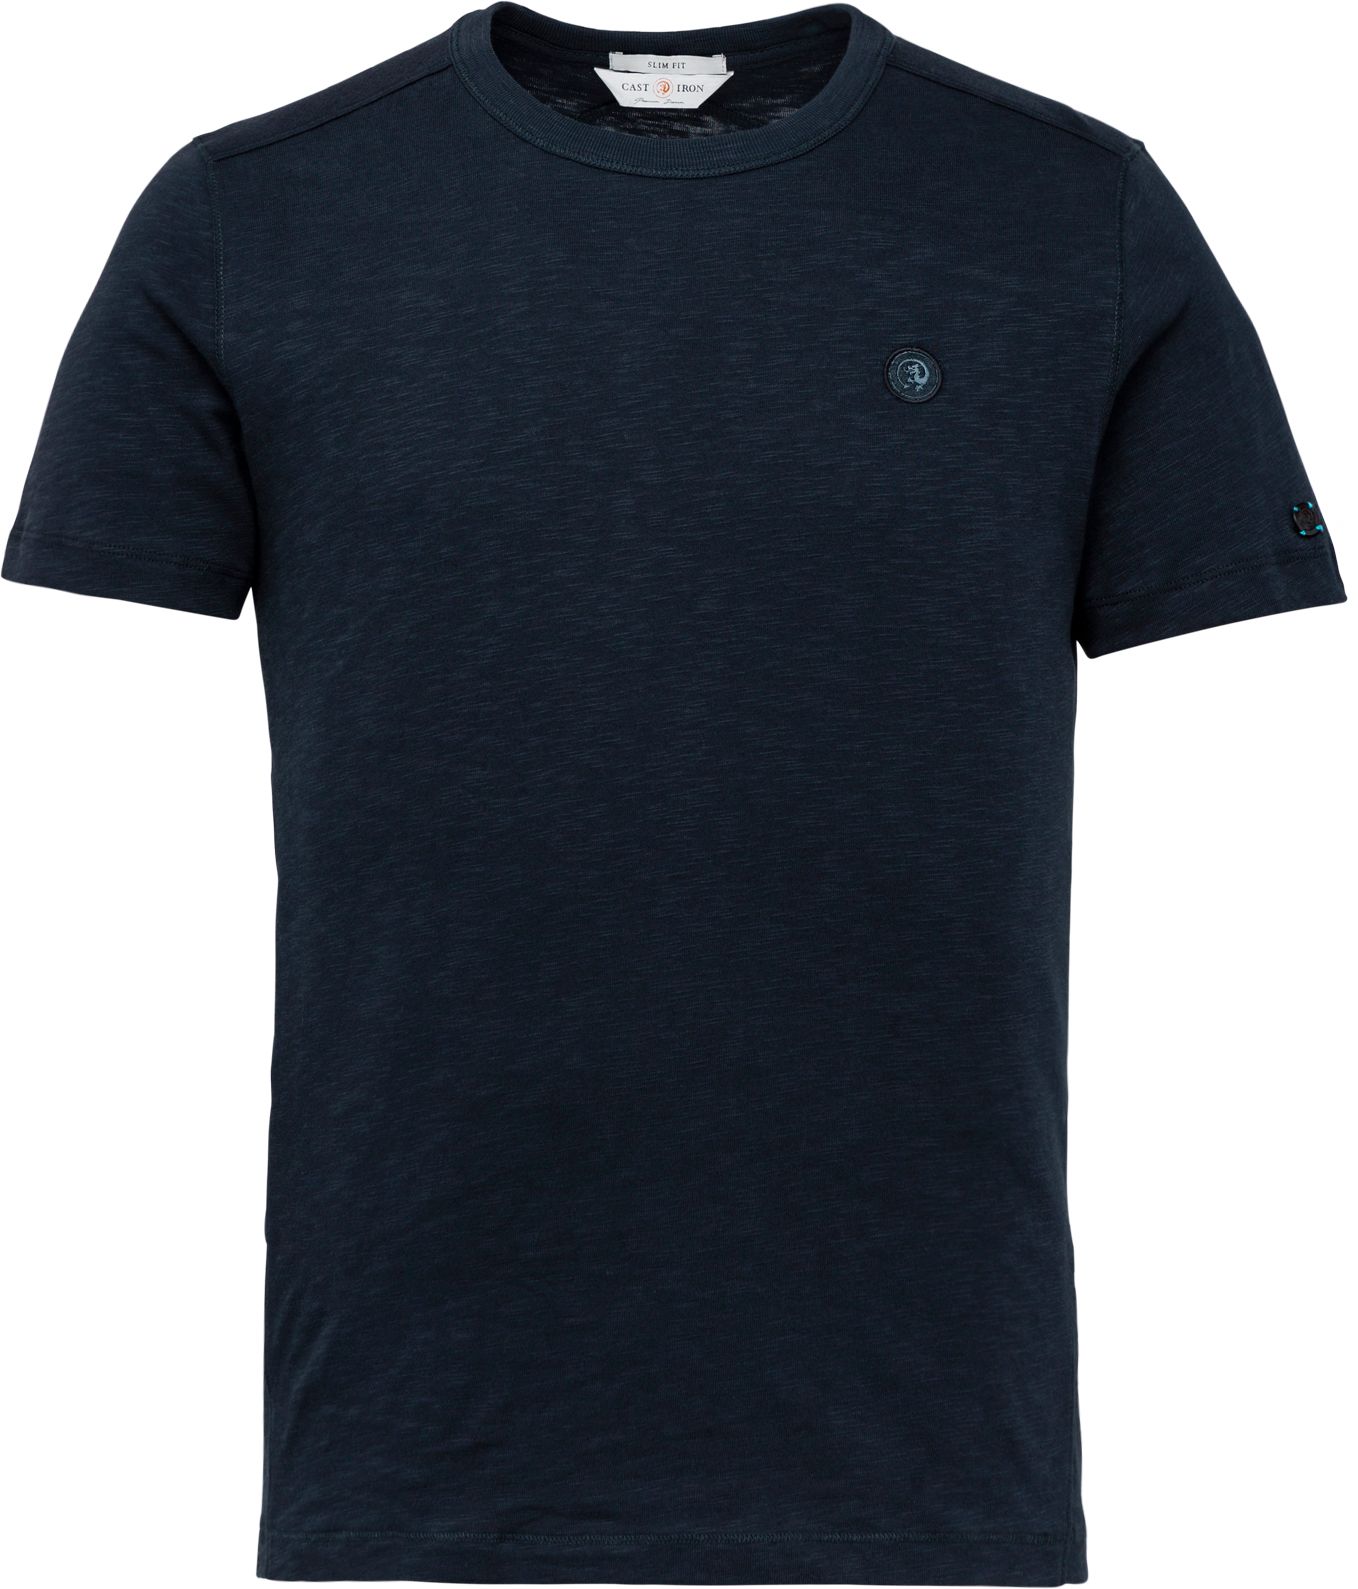 Cast Iron T Shirt Navy Dark Blue size L